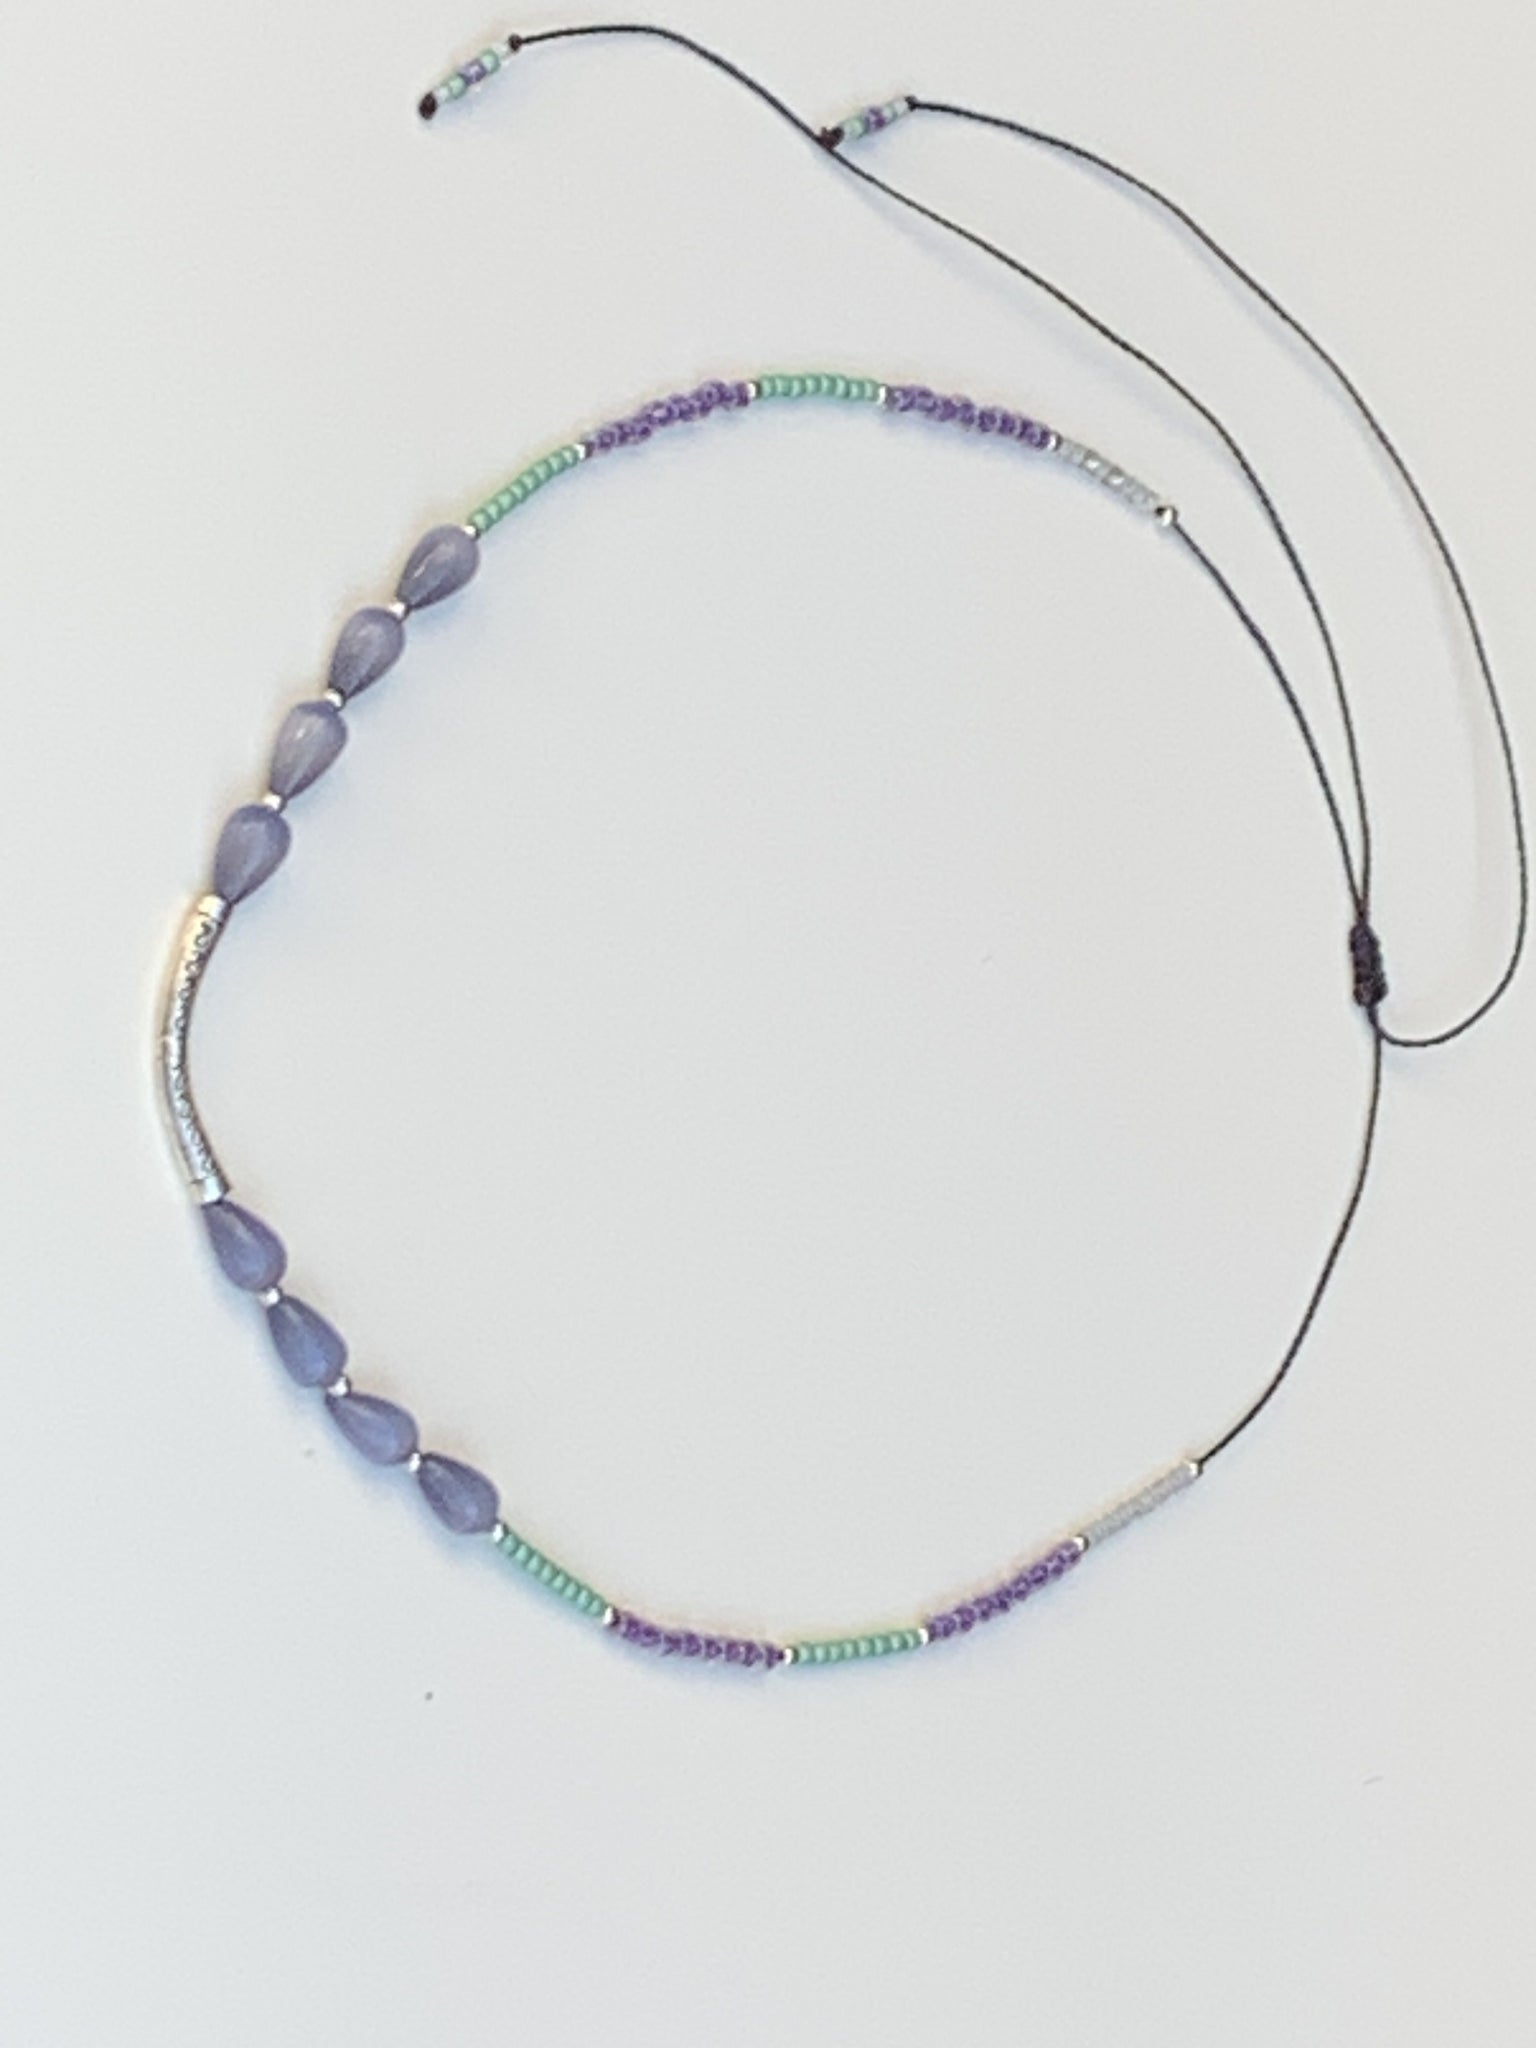 Waxed cord necklace - Lavender Teardrop